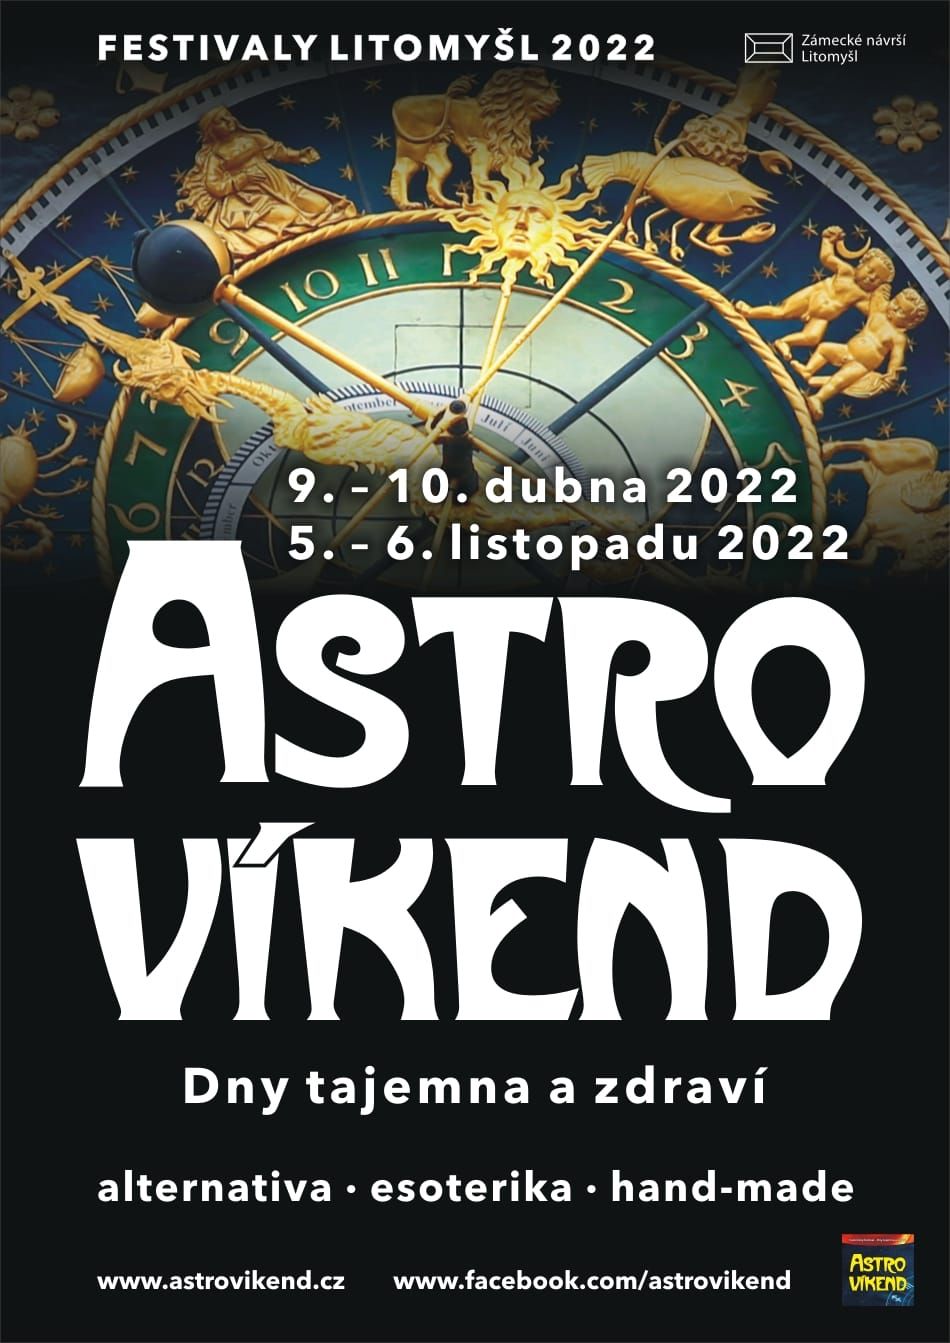 Astro Weekend in Litomyšl